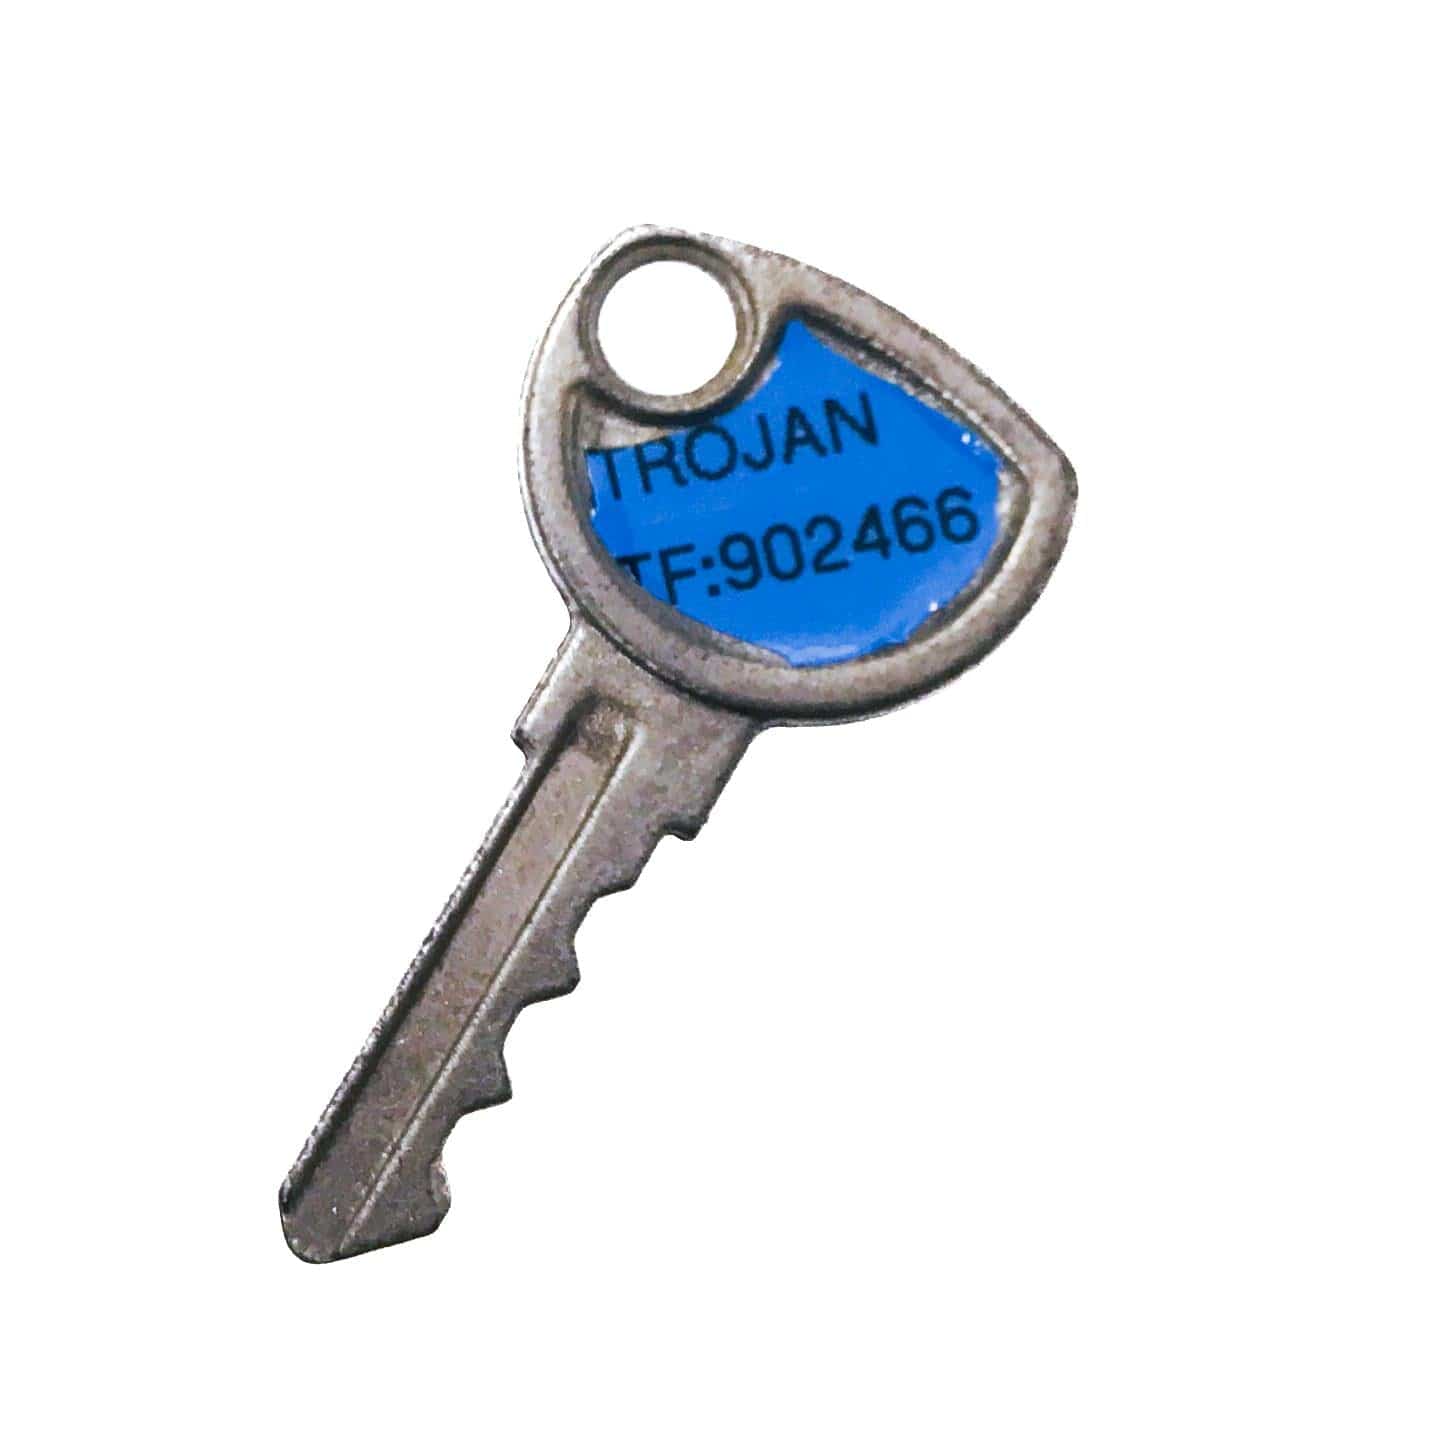 Replacement Window Key 0276-011 to Suit Trojan Window Lock Handles Pre Cut Service Item Thunderfix 902466